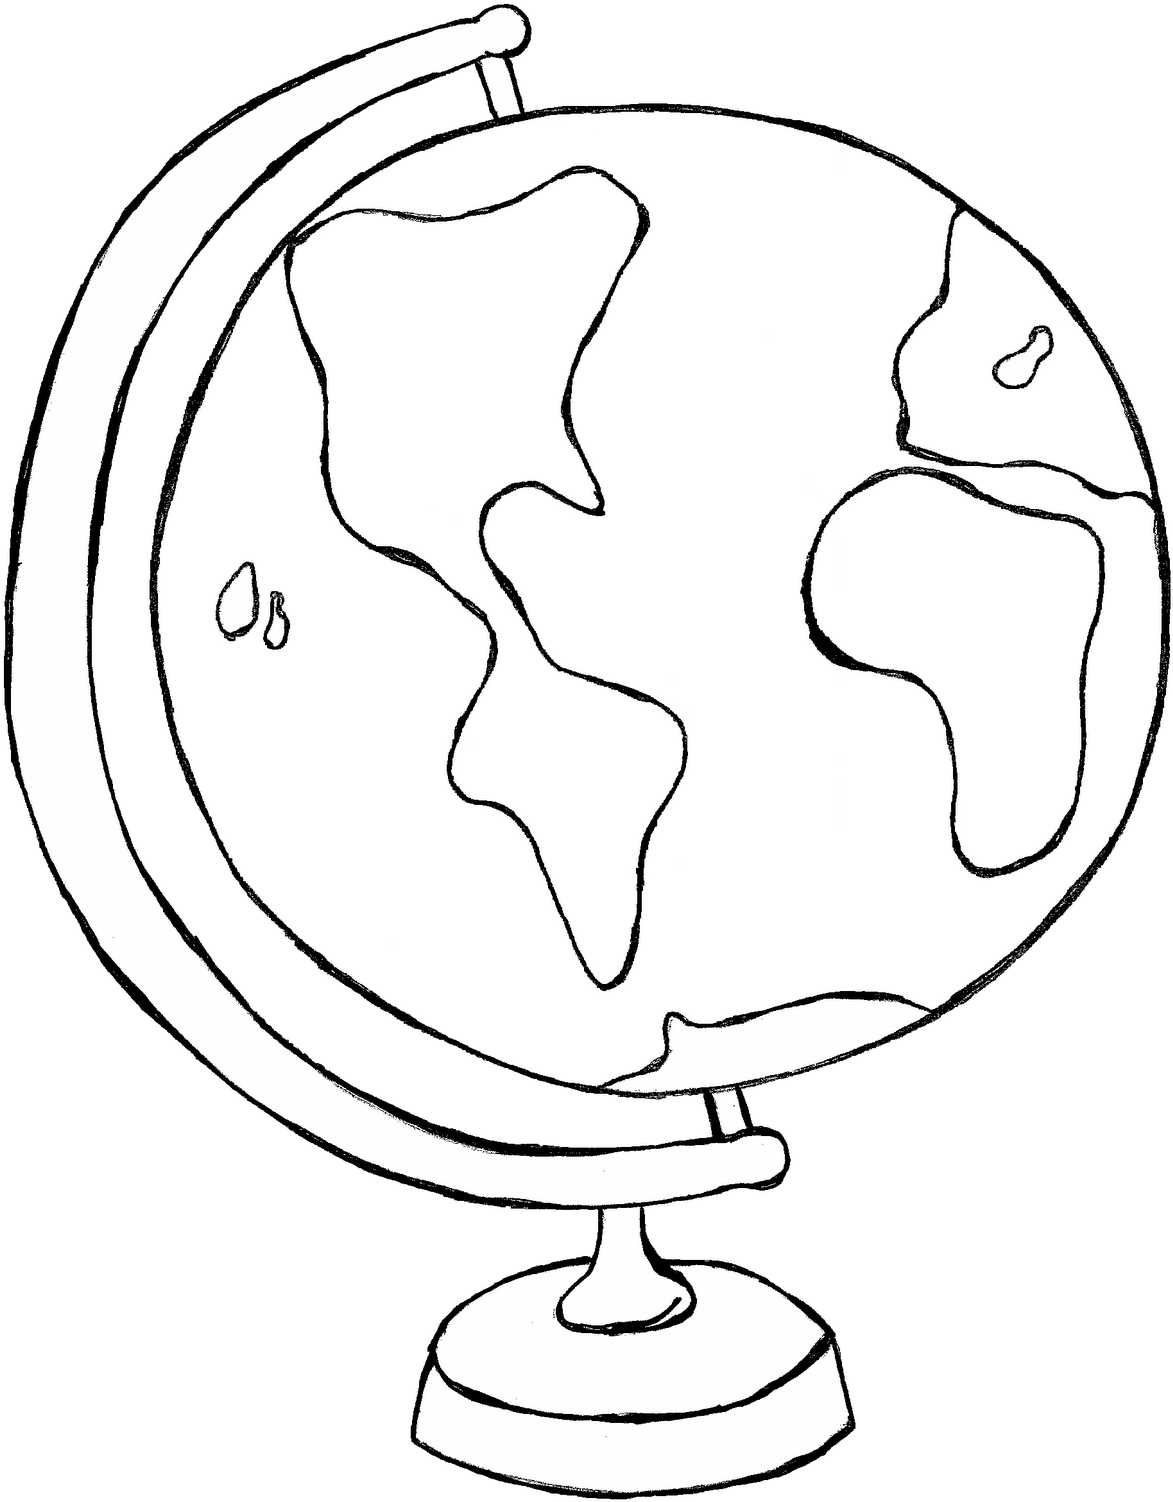 Clip Art Of World Clipart 2 Image - Clipart Black And White Globe (1286x1600)